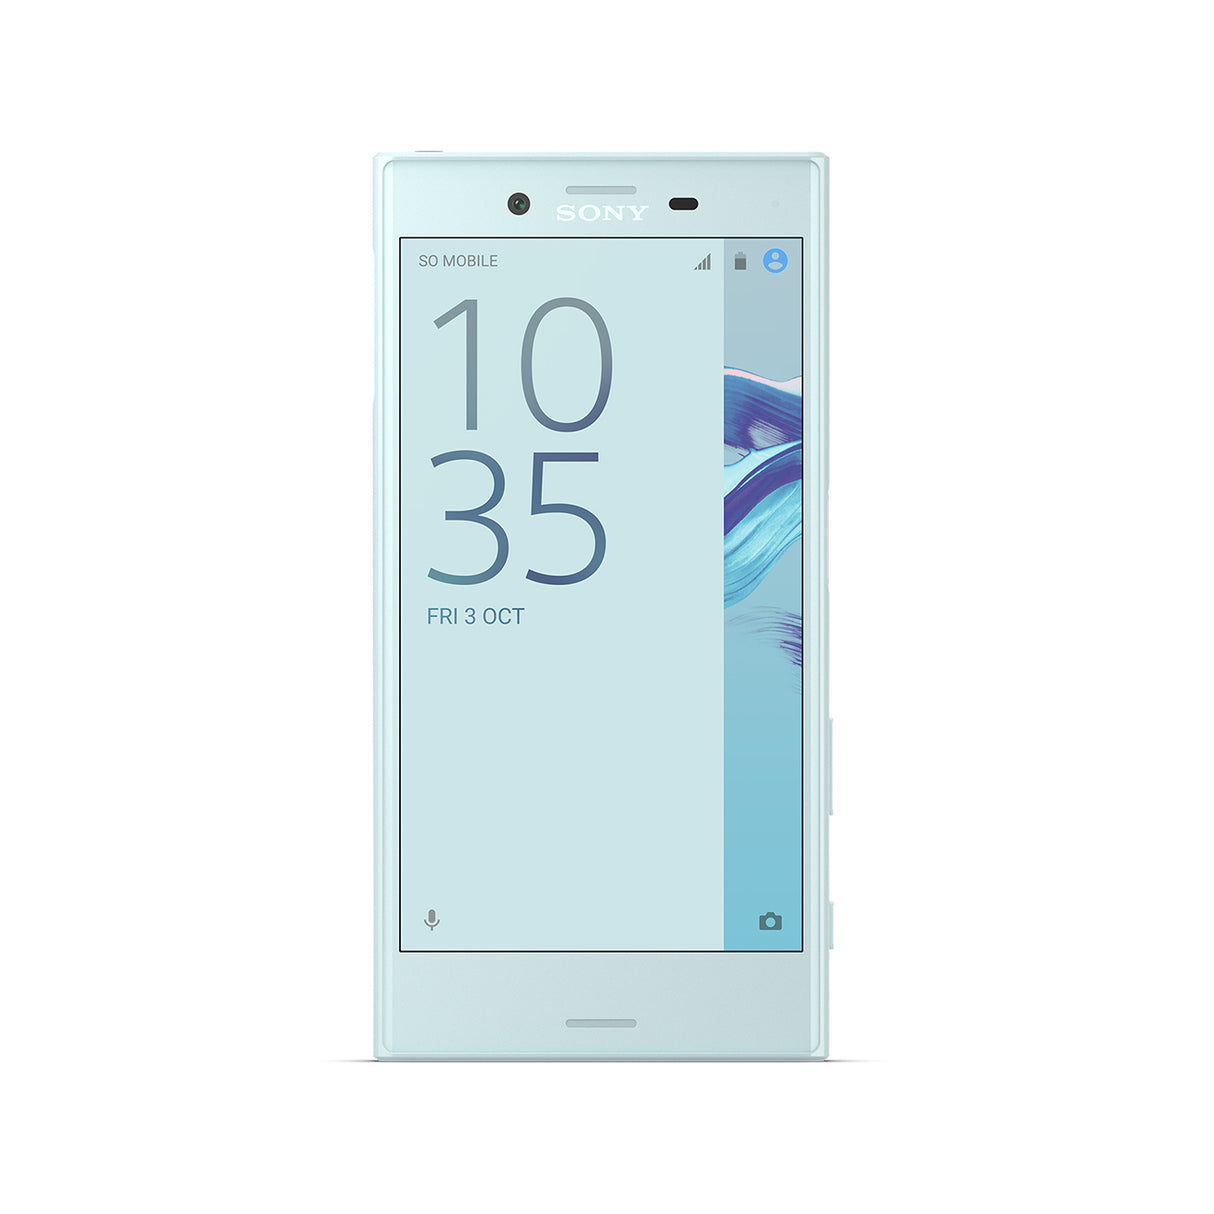 Sony Xperia X - 32 GB - White - Unlocked - GSM